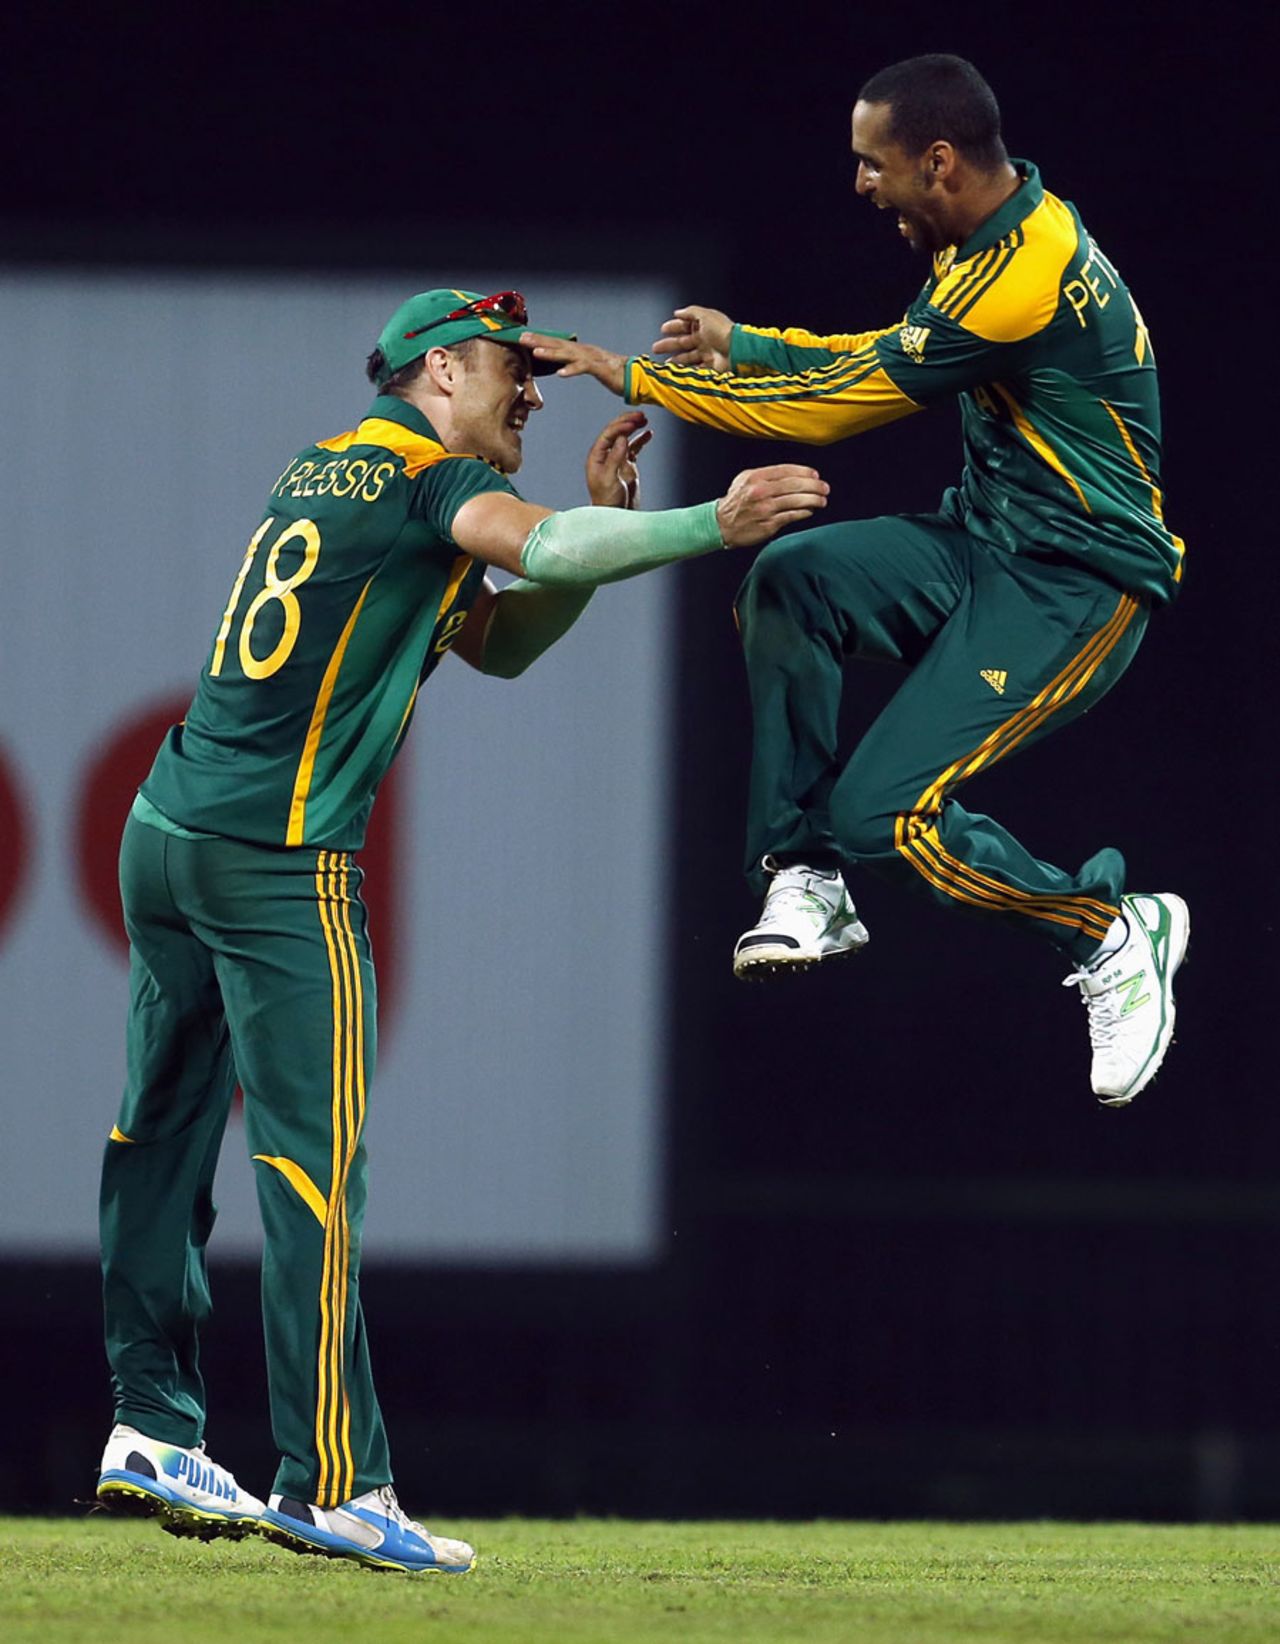 Robin Peterson celebrates the wicket of Mahela Jayawardene, Sri Lanka v South Africa, 3rd ODI, Pallekele, July 26, 2013